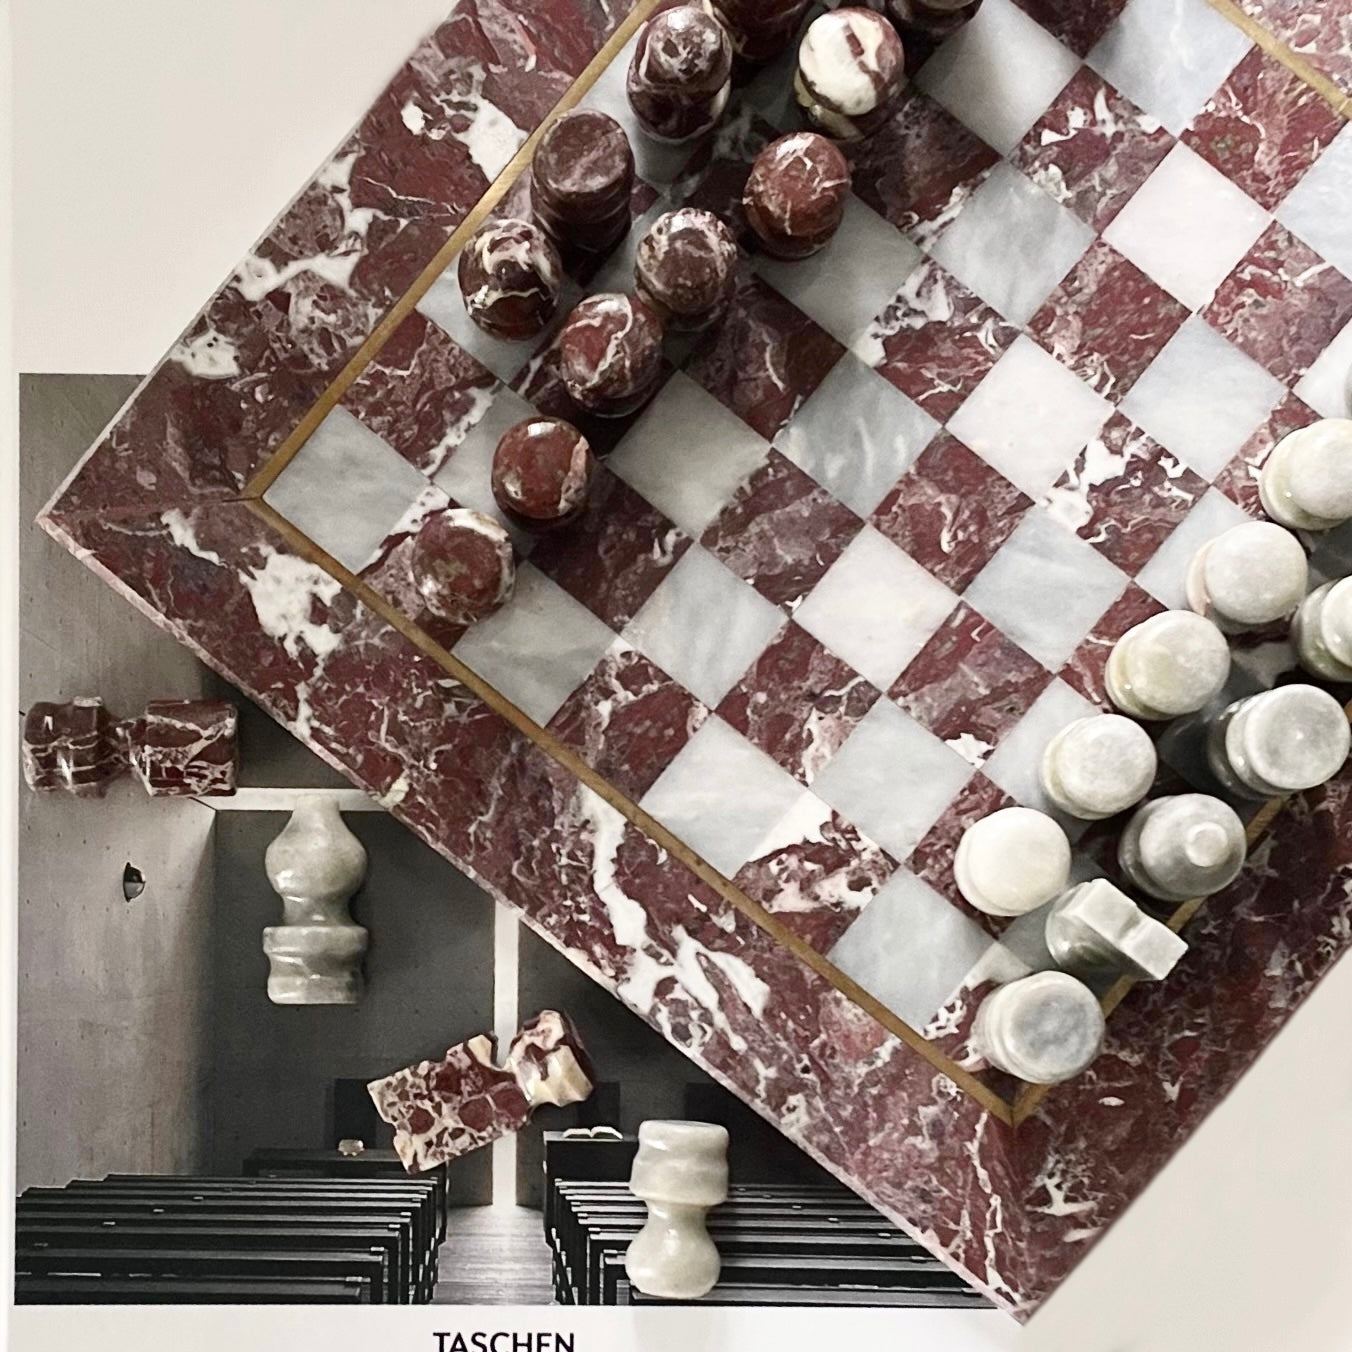 Vintage Marble Chess Set